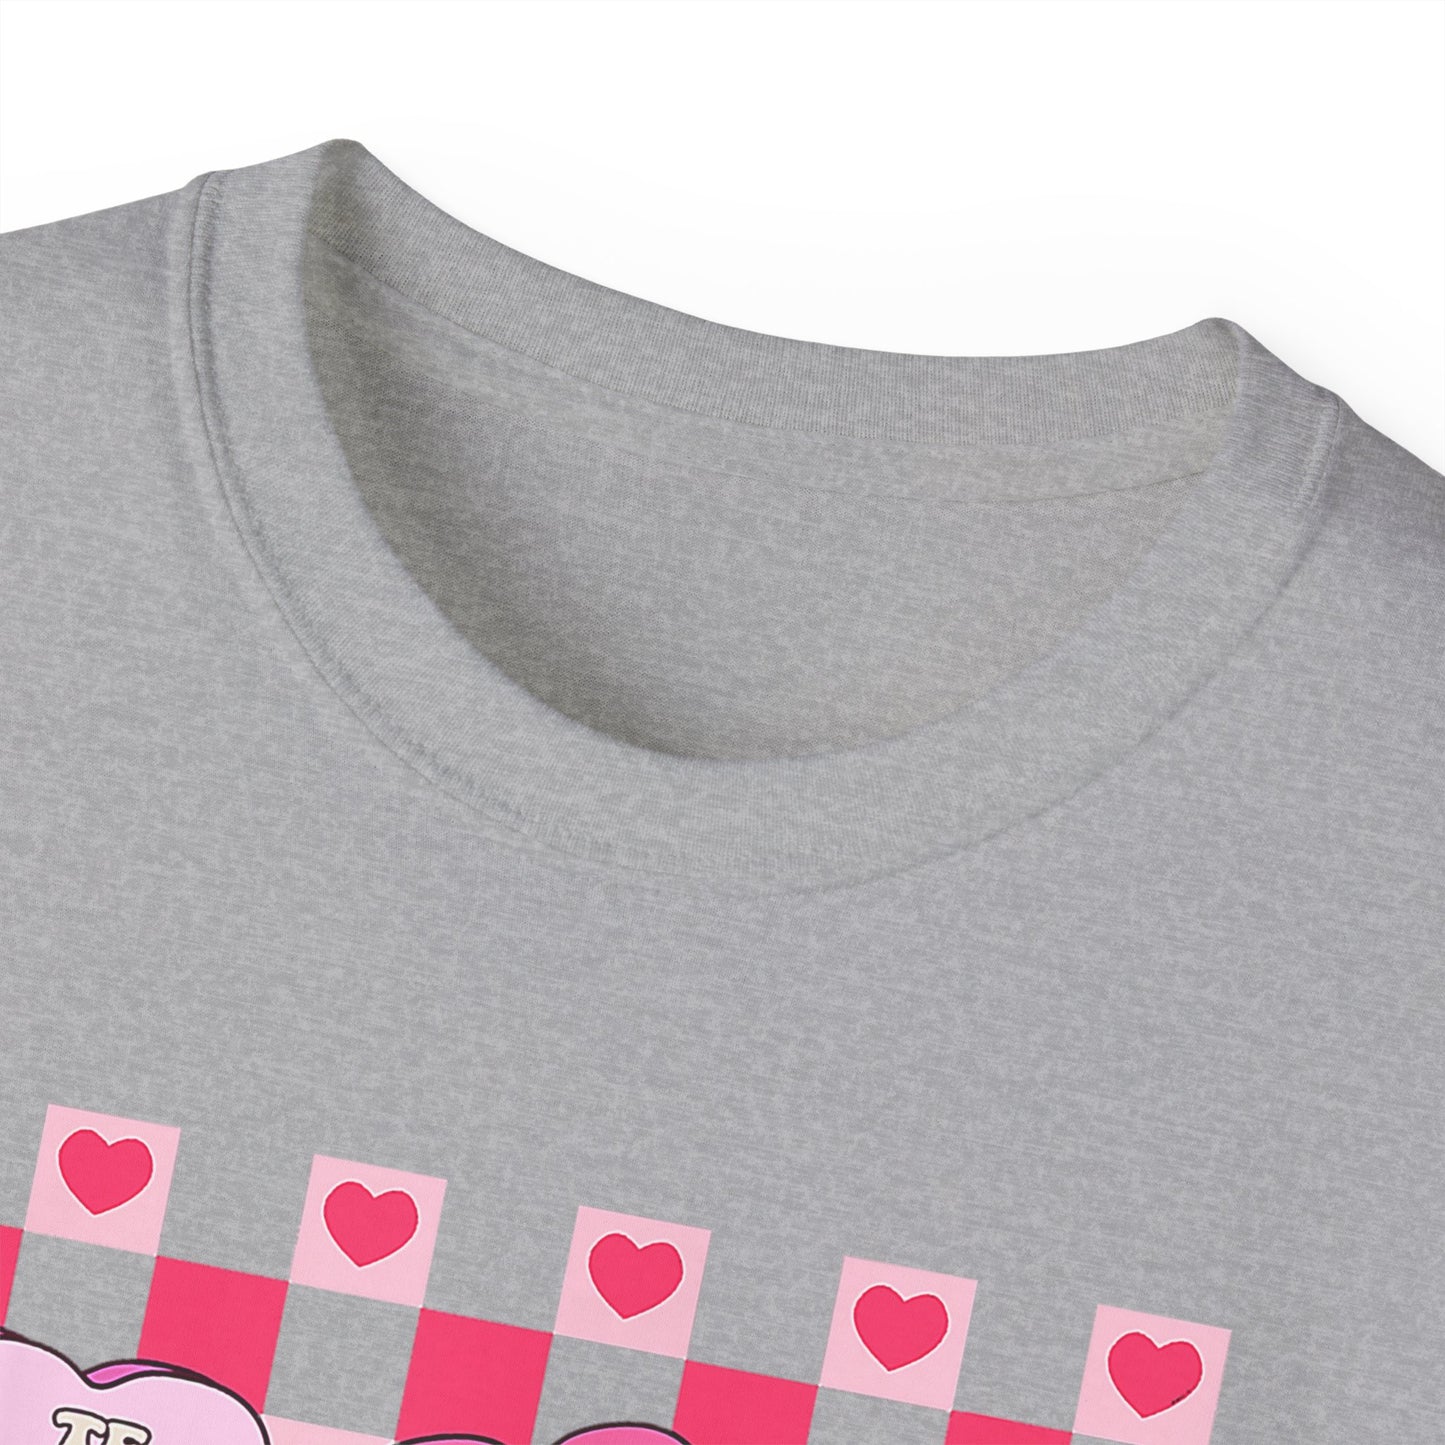 Besos De Amor - Unisex t-shirt - Amor